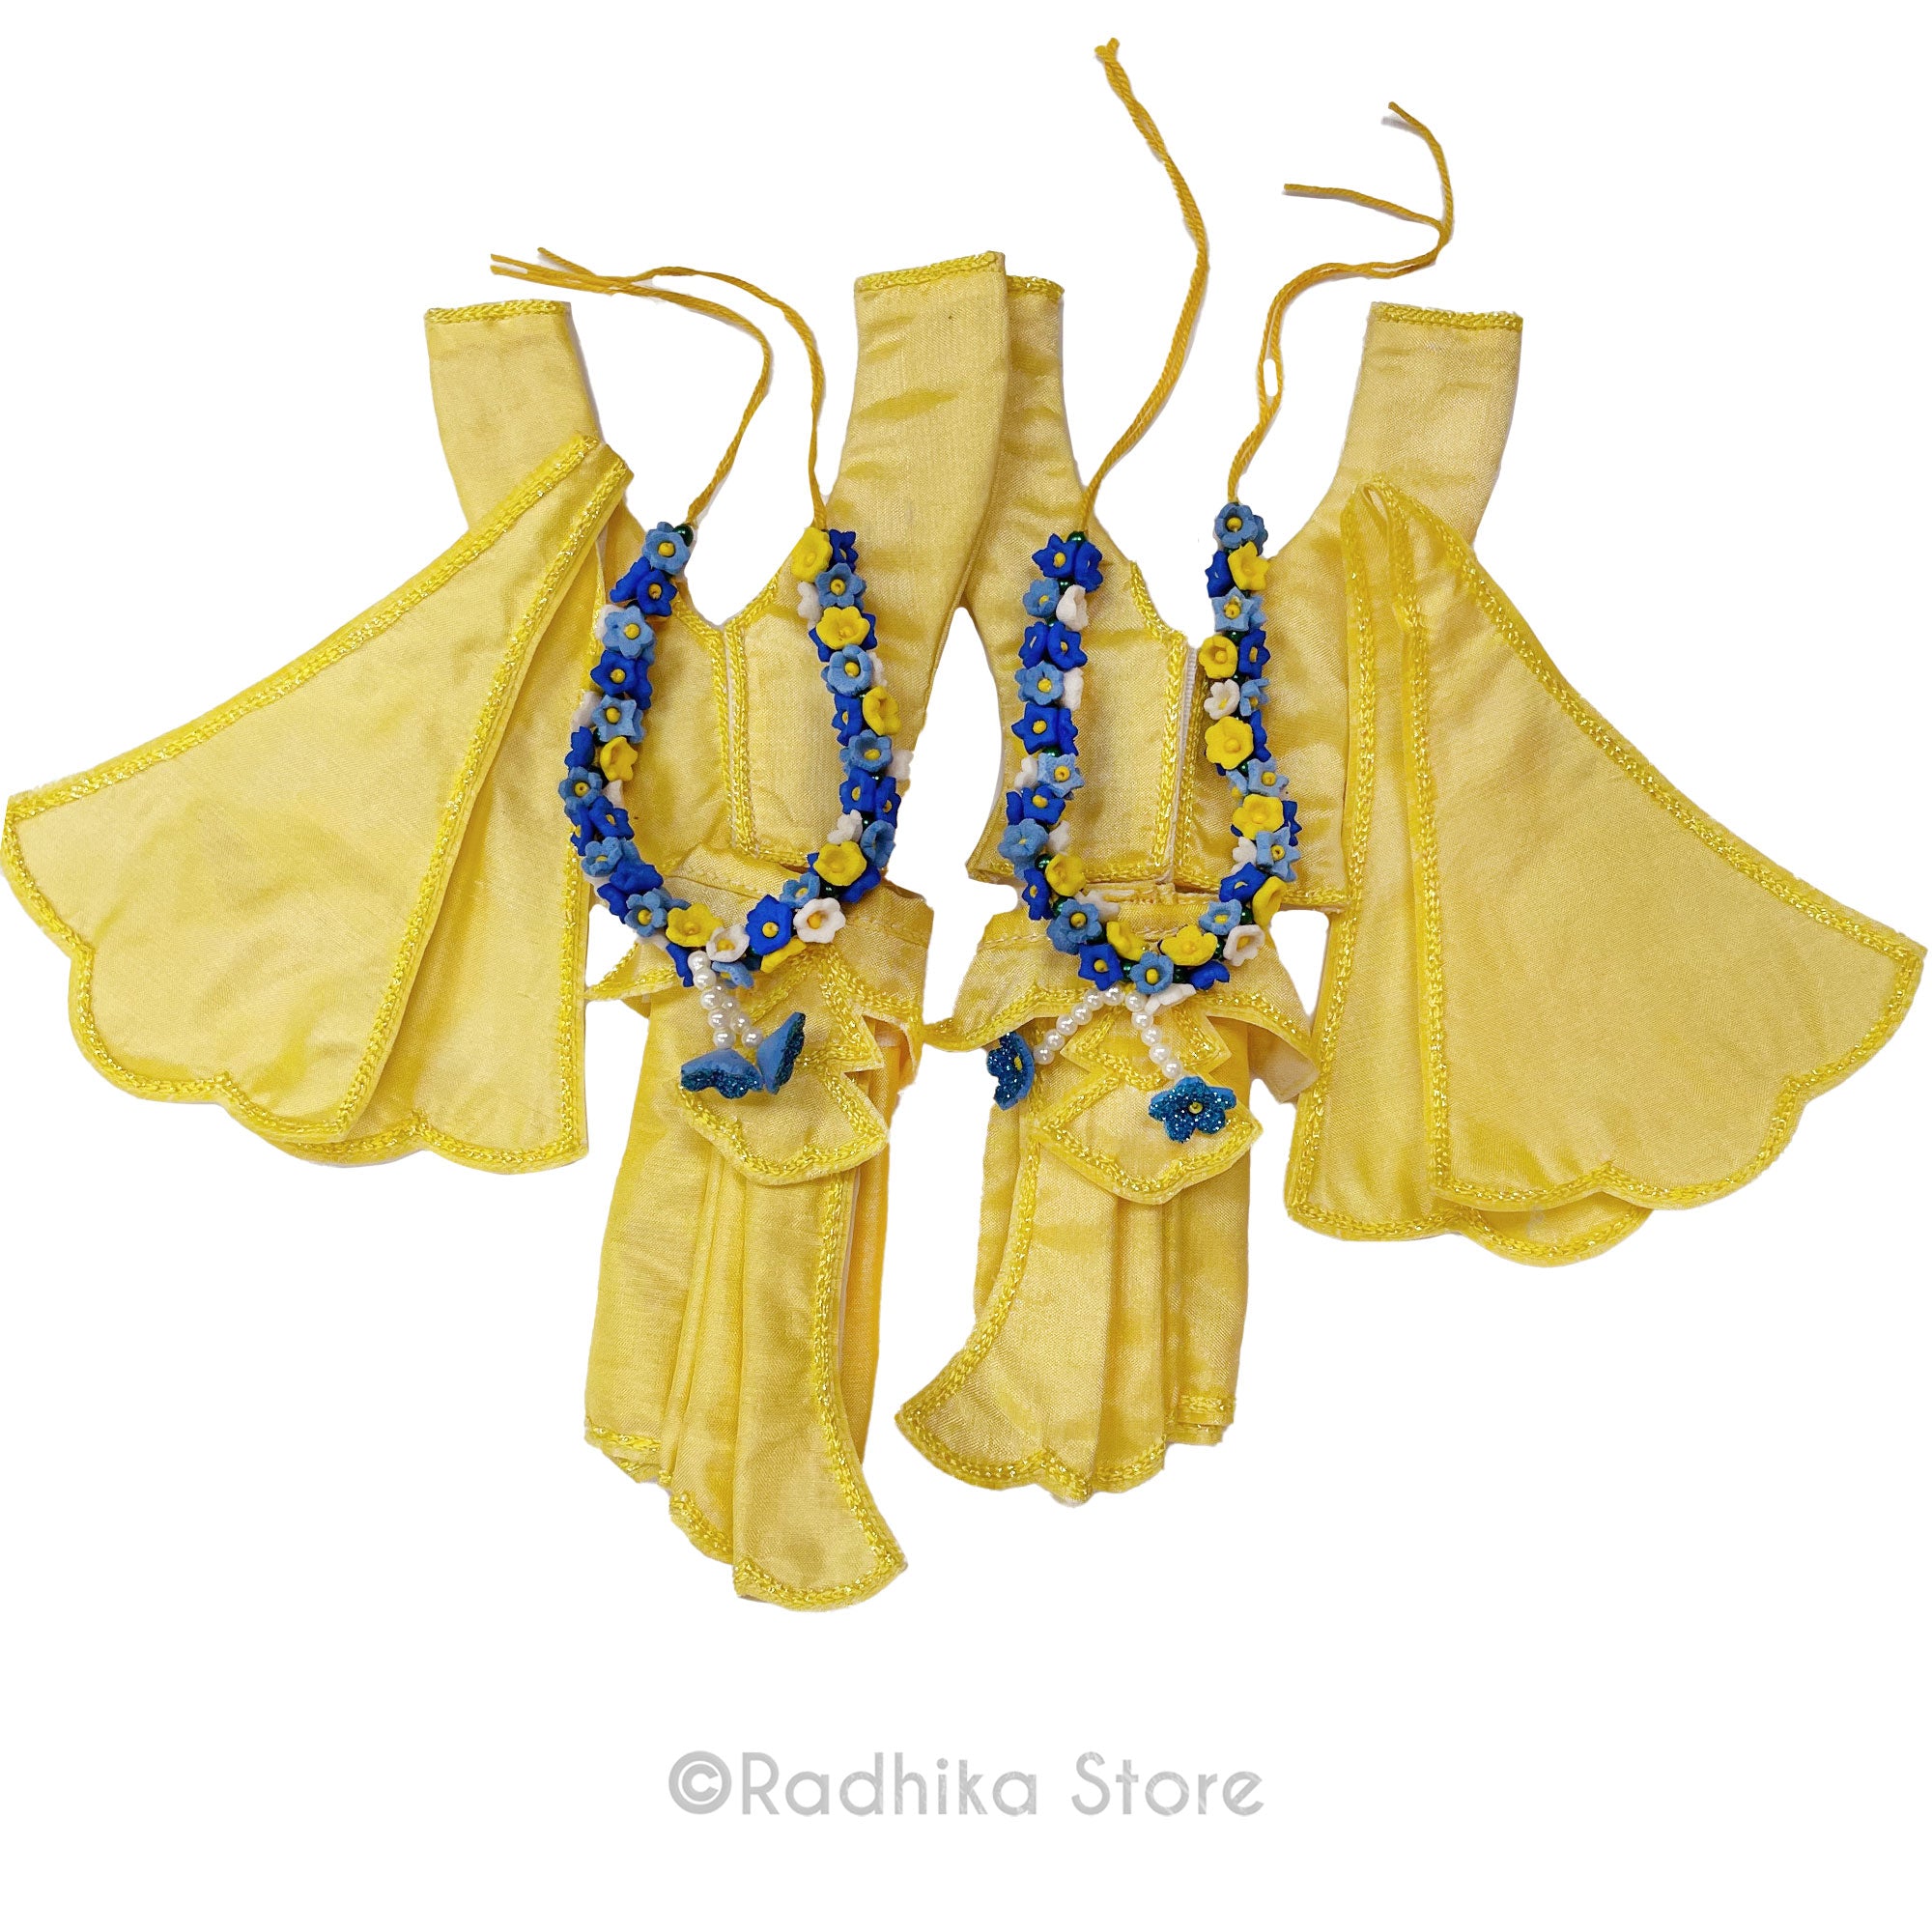 Blissful Golden Moon - Gaura Nitai Deity Outfit